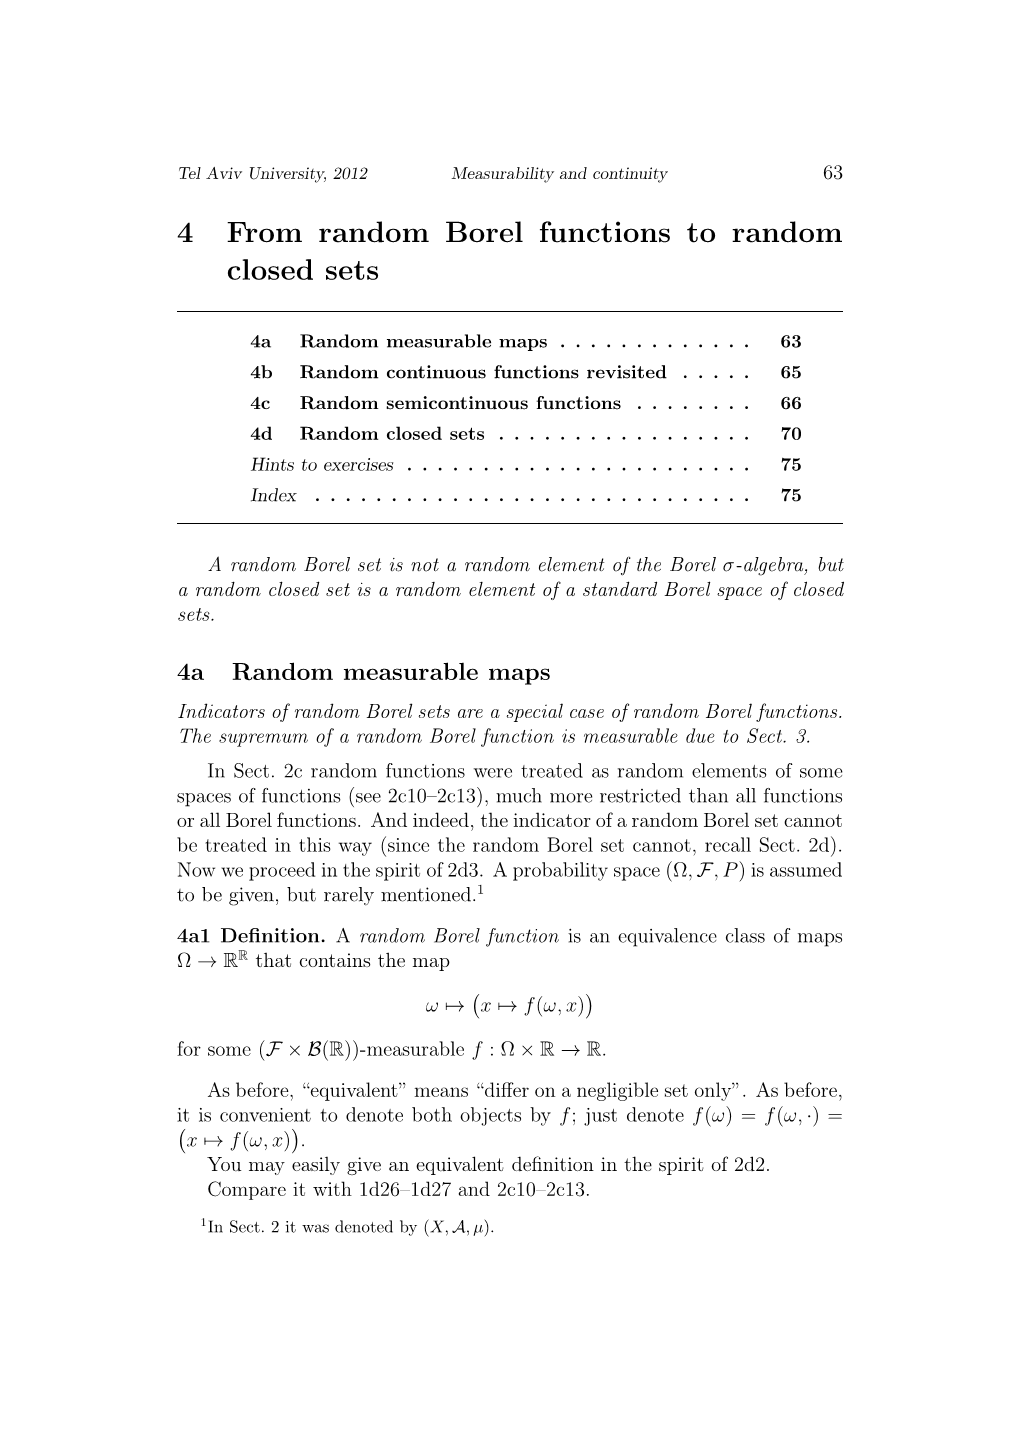 4 from Random Borel Functions to Random Closed Sets